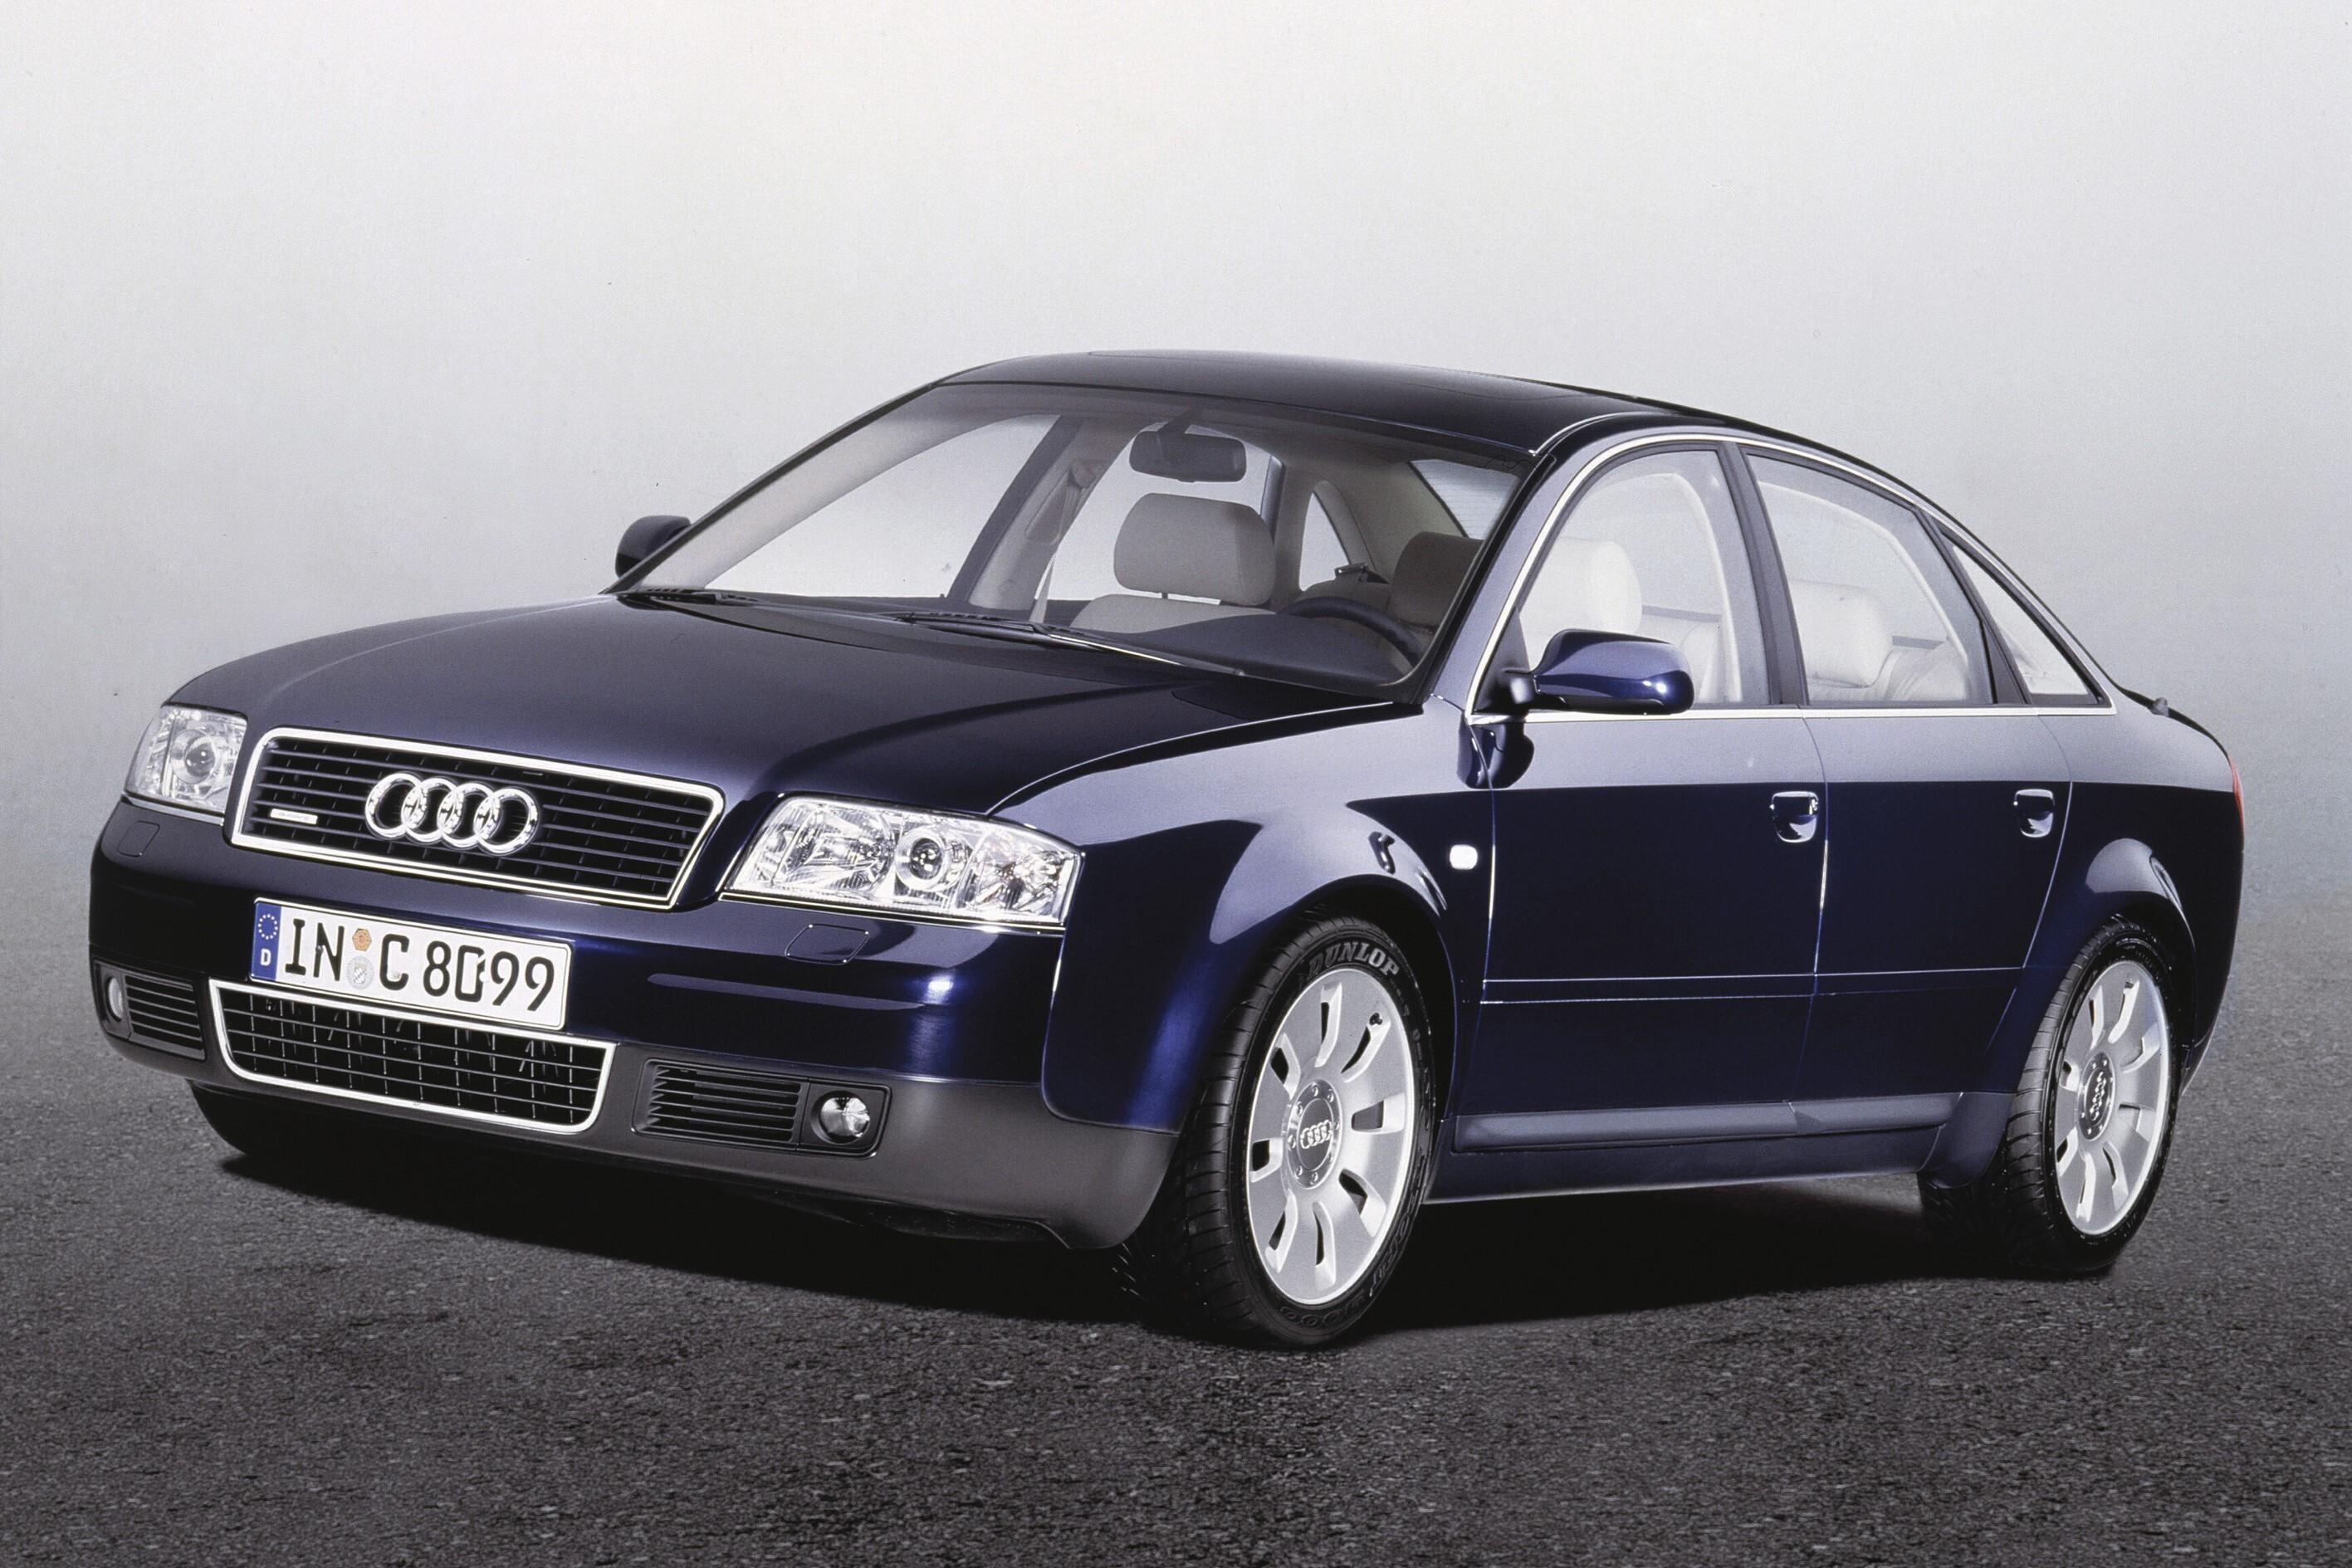 Ауди а6 с5 2001 год. Audi a6 [c5] 1997-2004. Audi a6 c5. Audi a6 c5 1999. Audi a6 quattro седан.